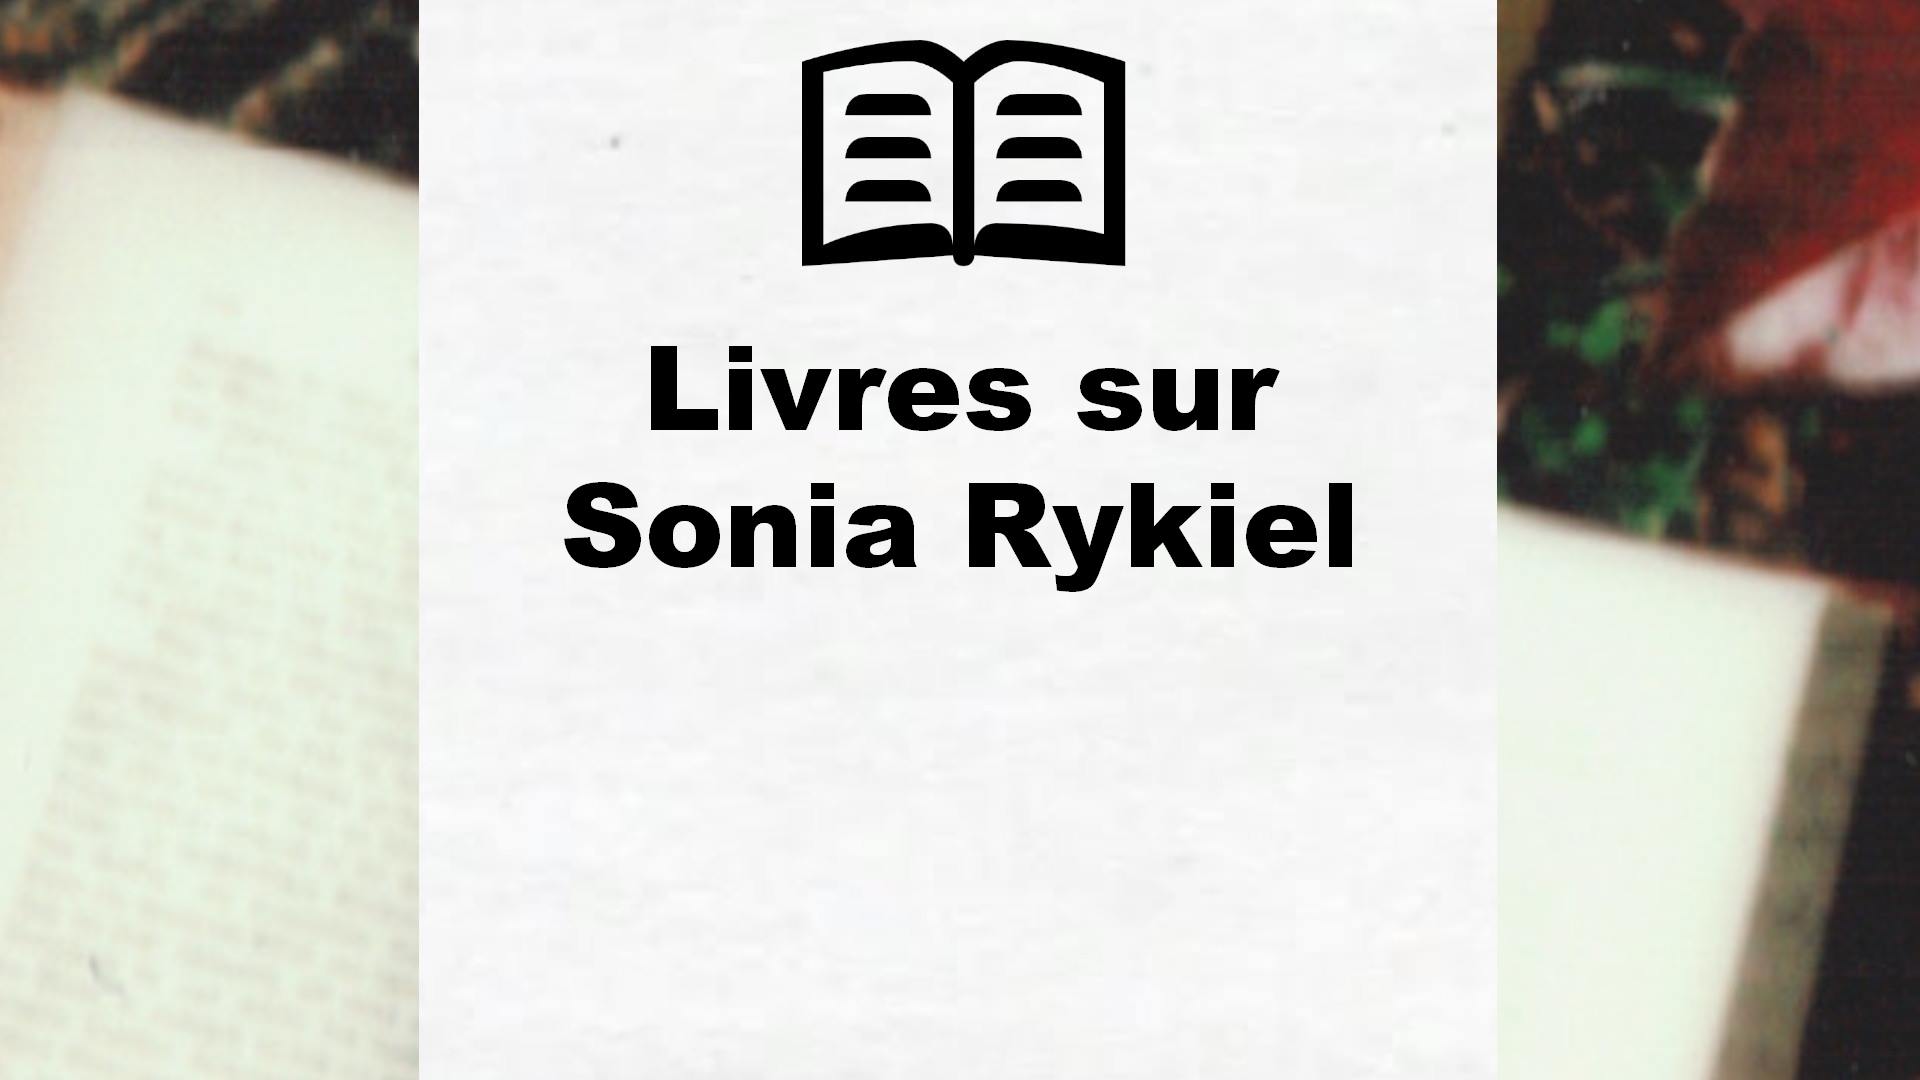 Livres sur Sonia Rykiel